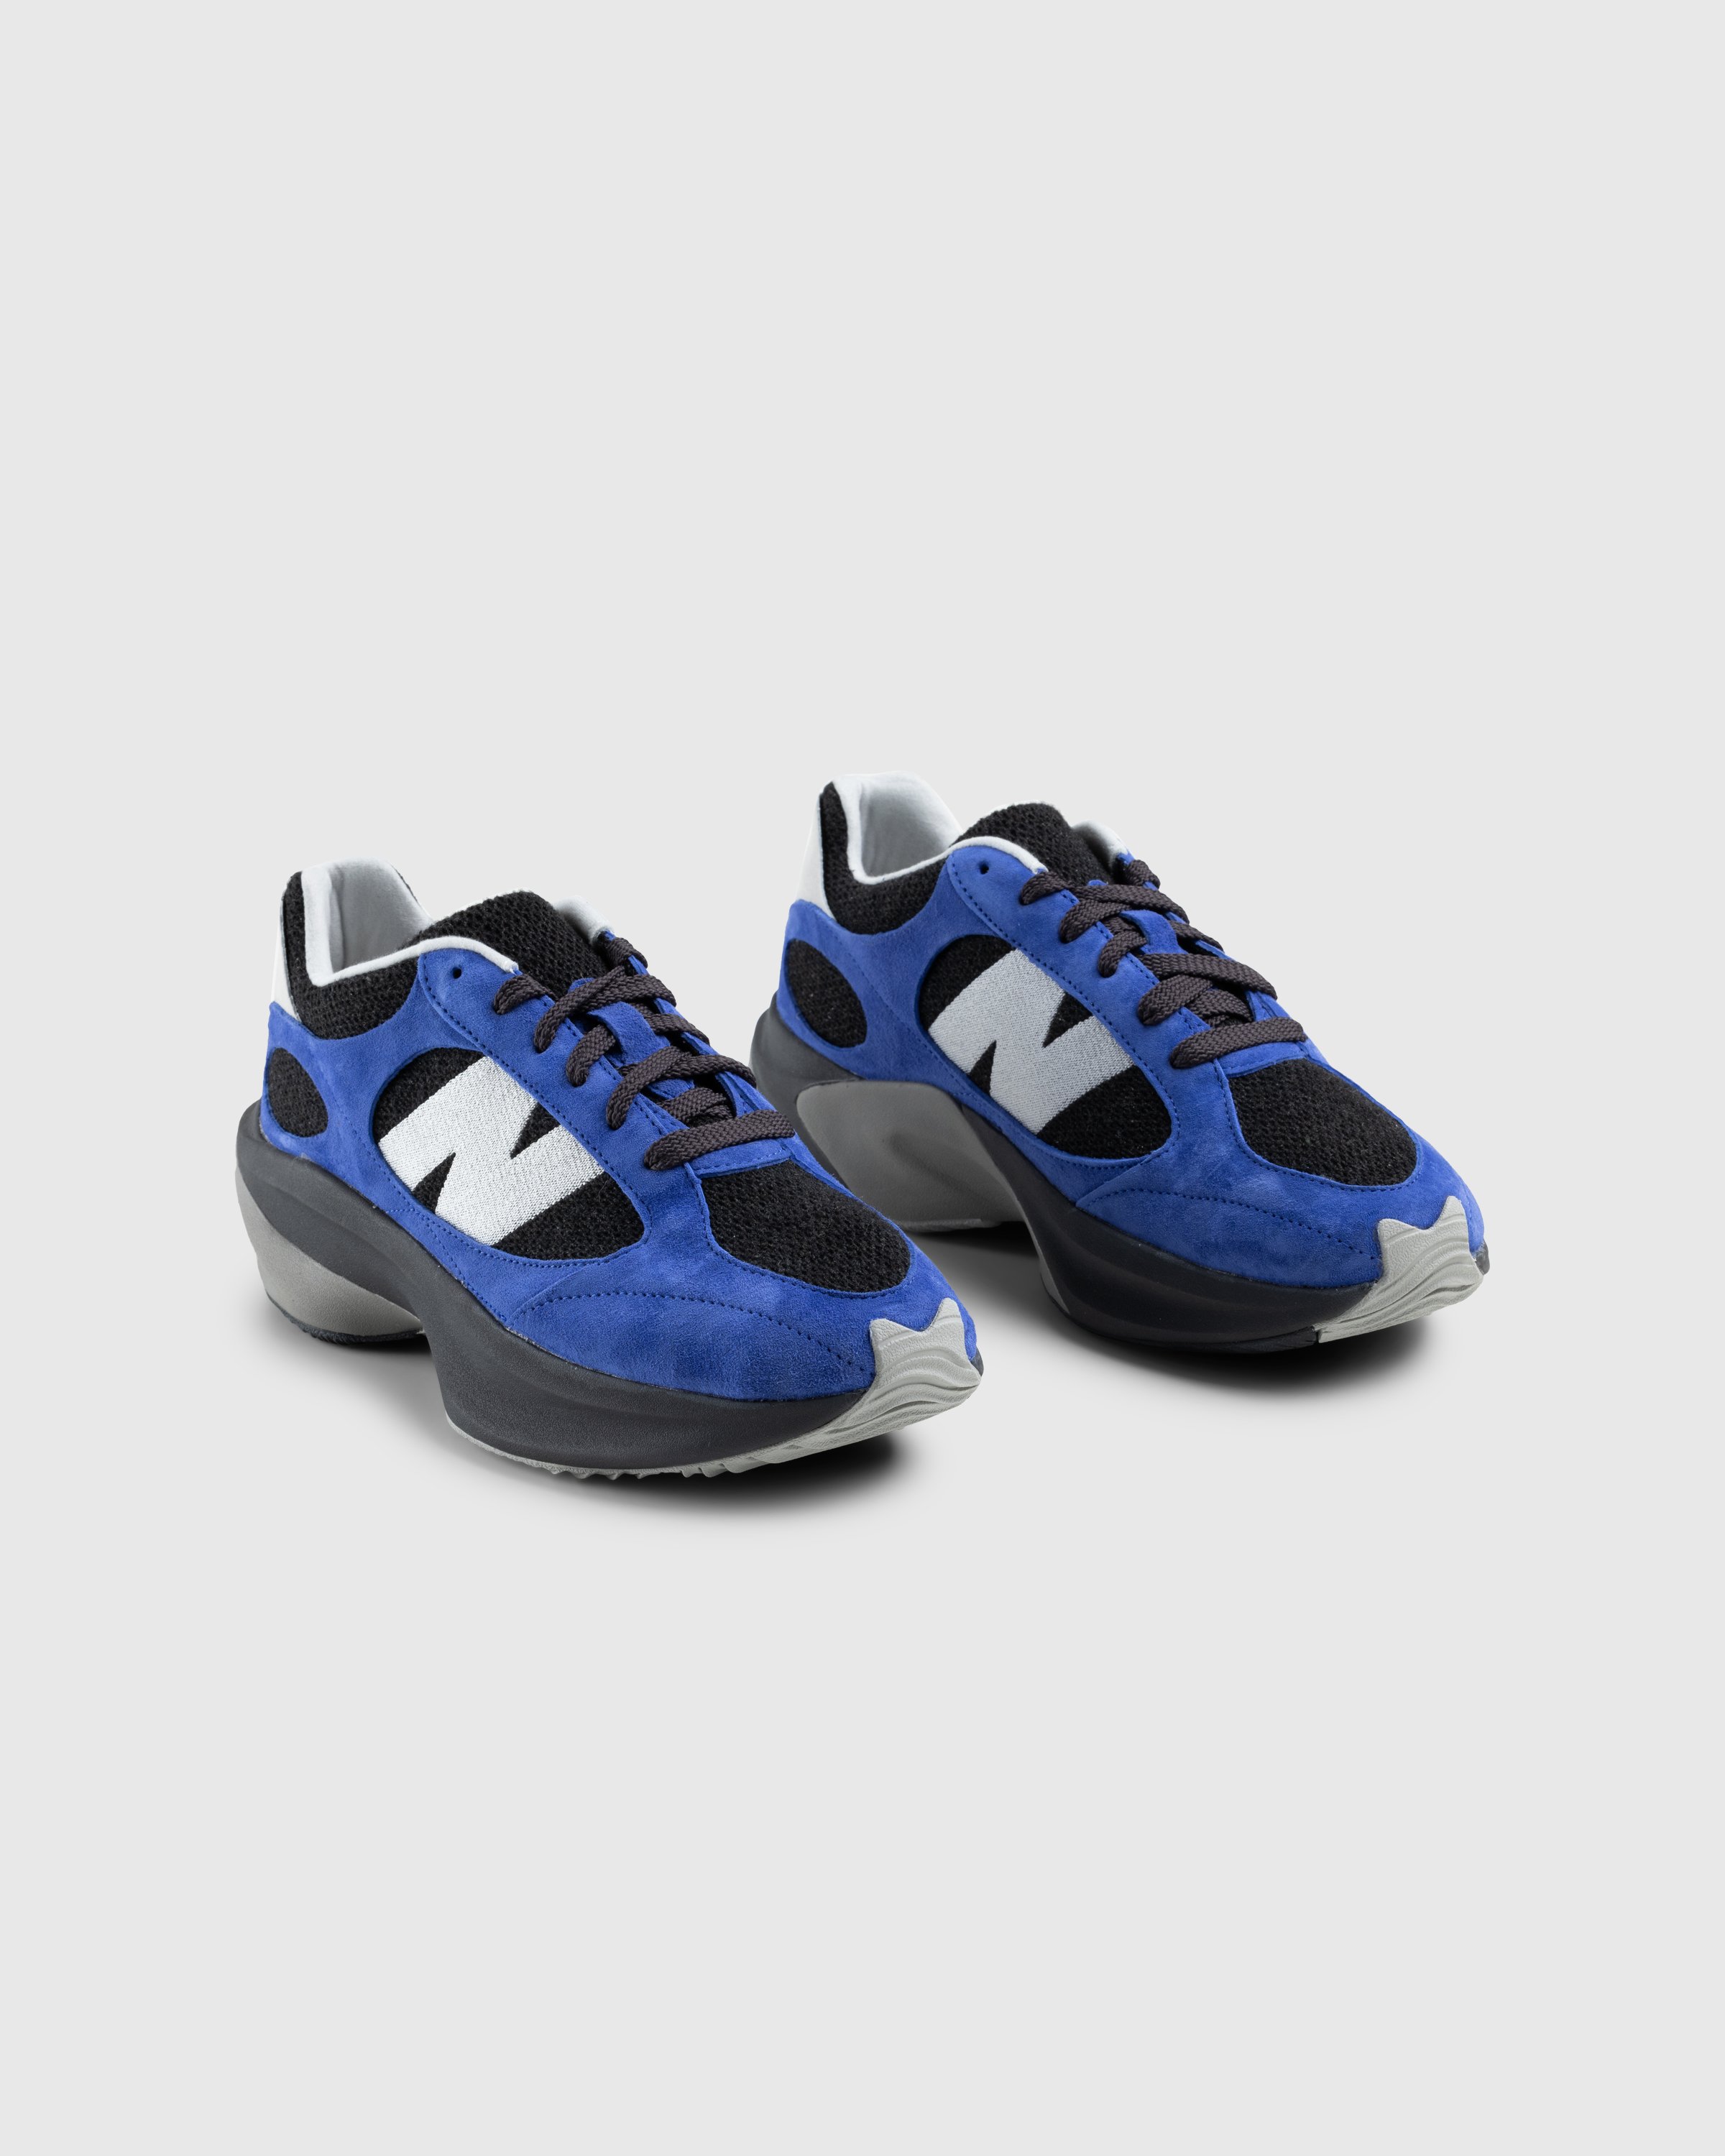 New Balance - WRPD Runner Marine Blue/Summer Fog - Footwear - Blue - Image 3